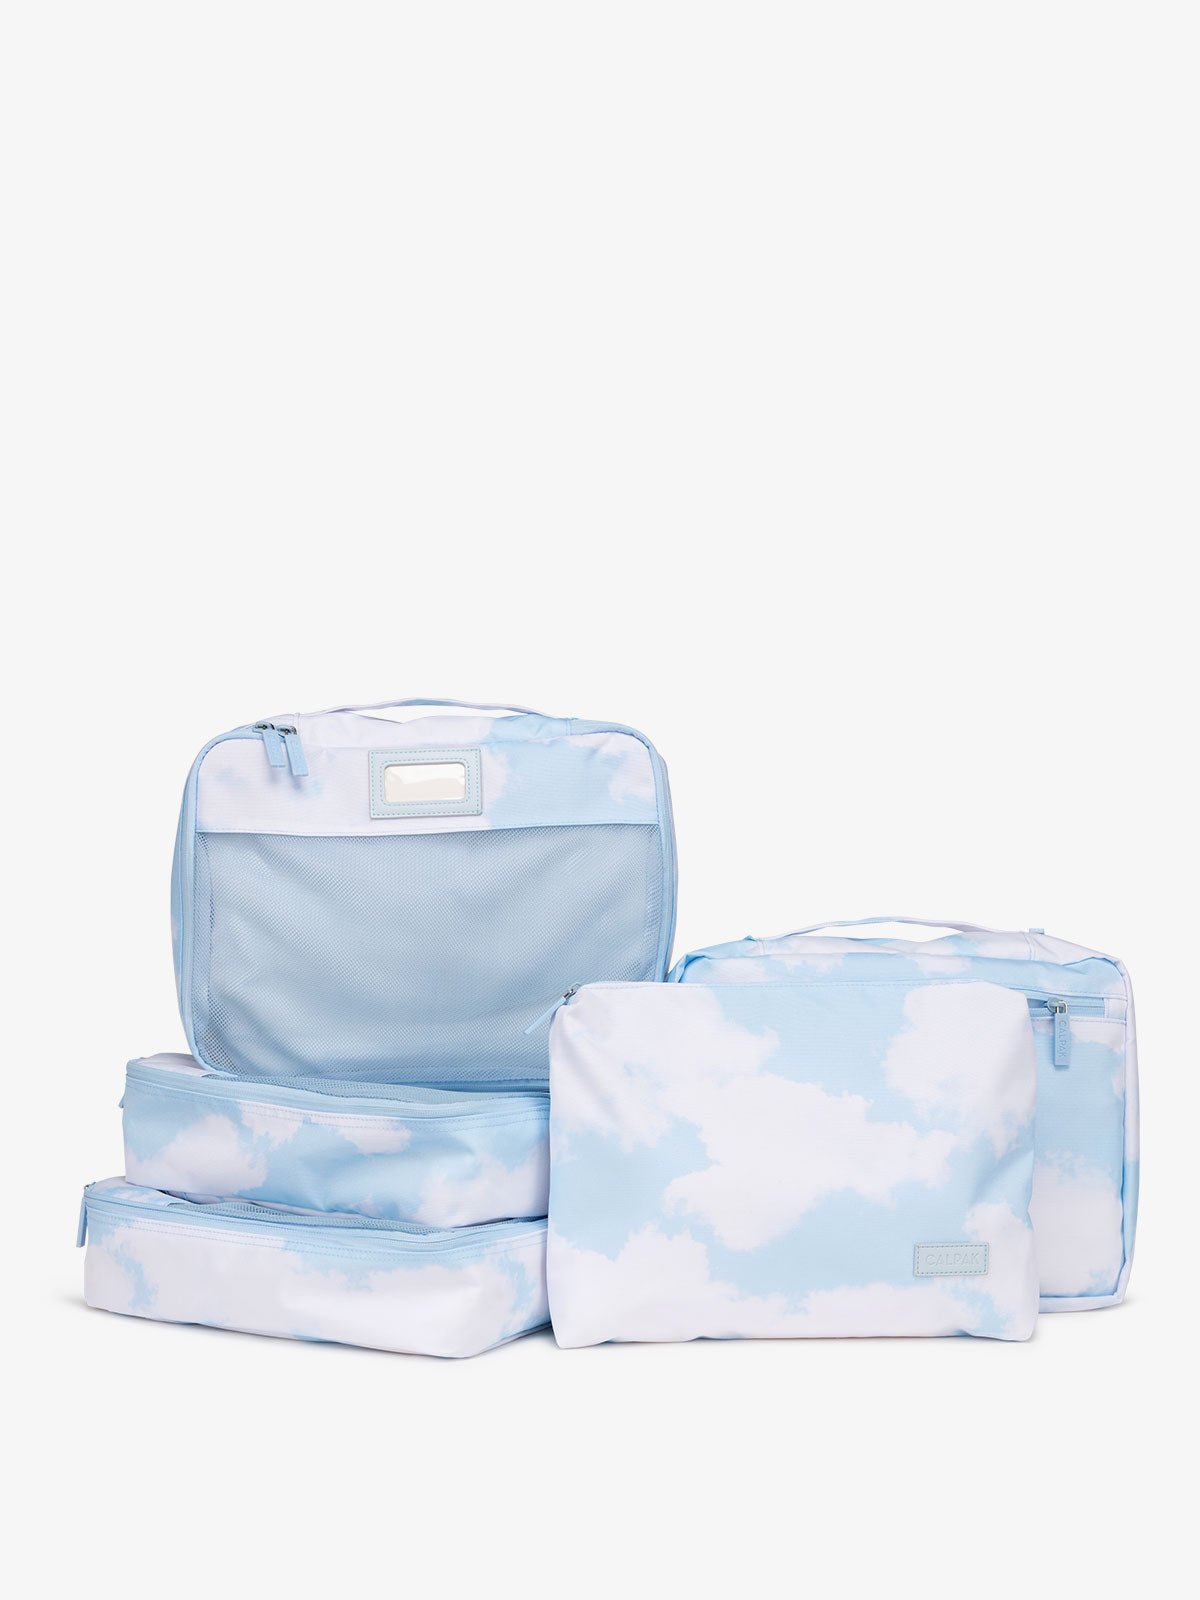 CALPAK packing storage cube for luggage